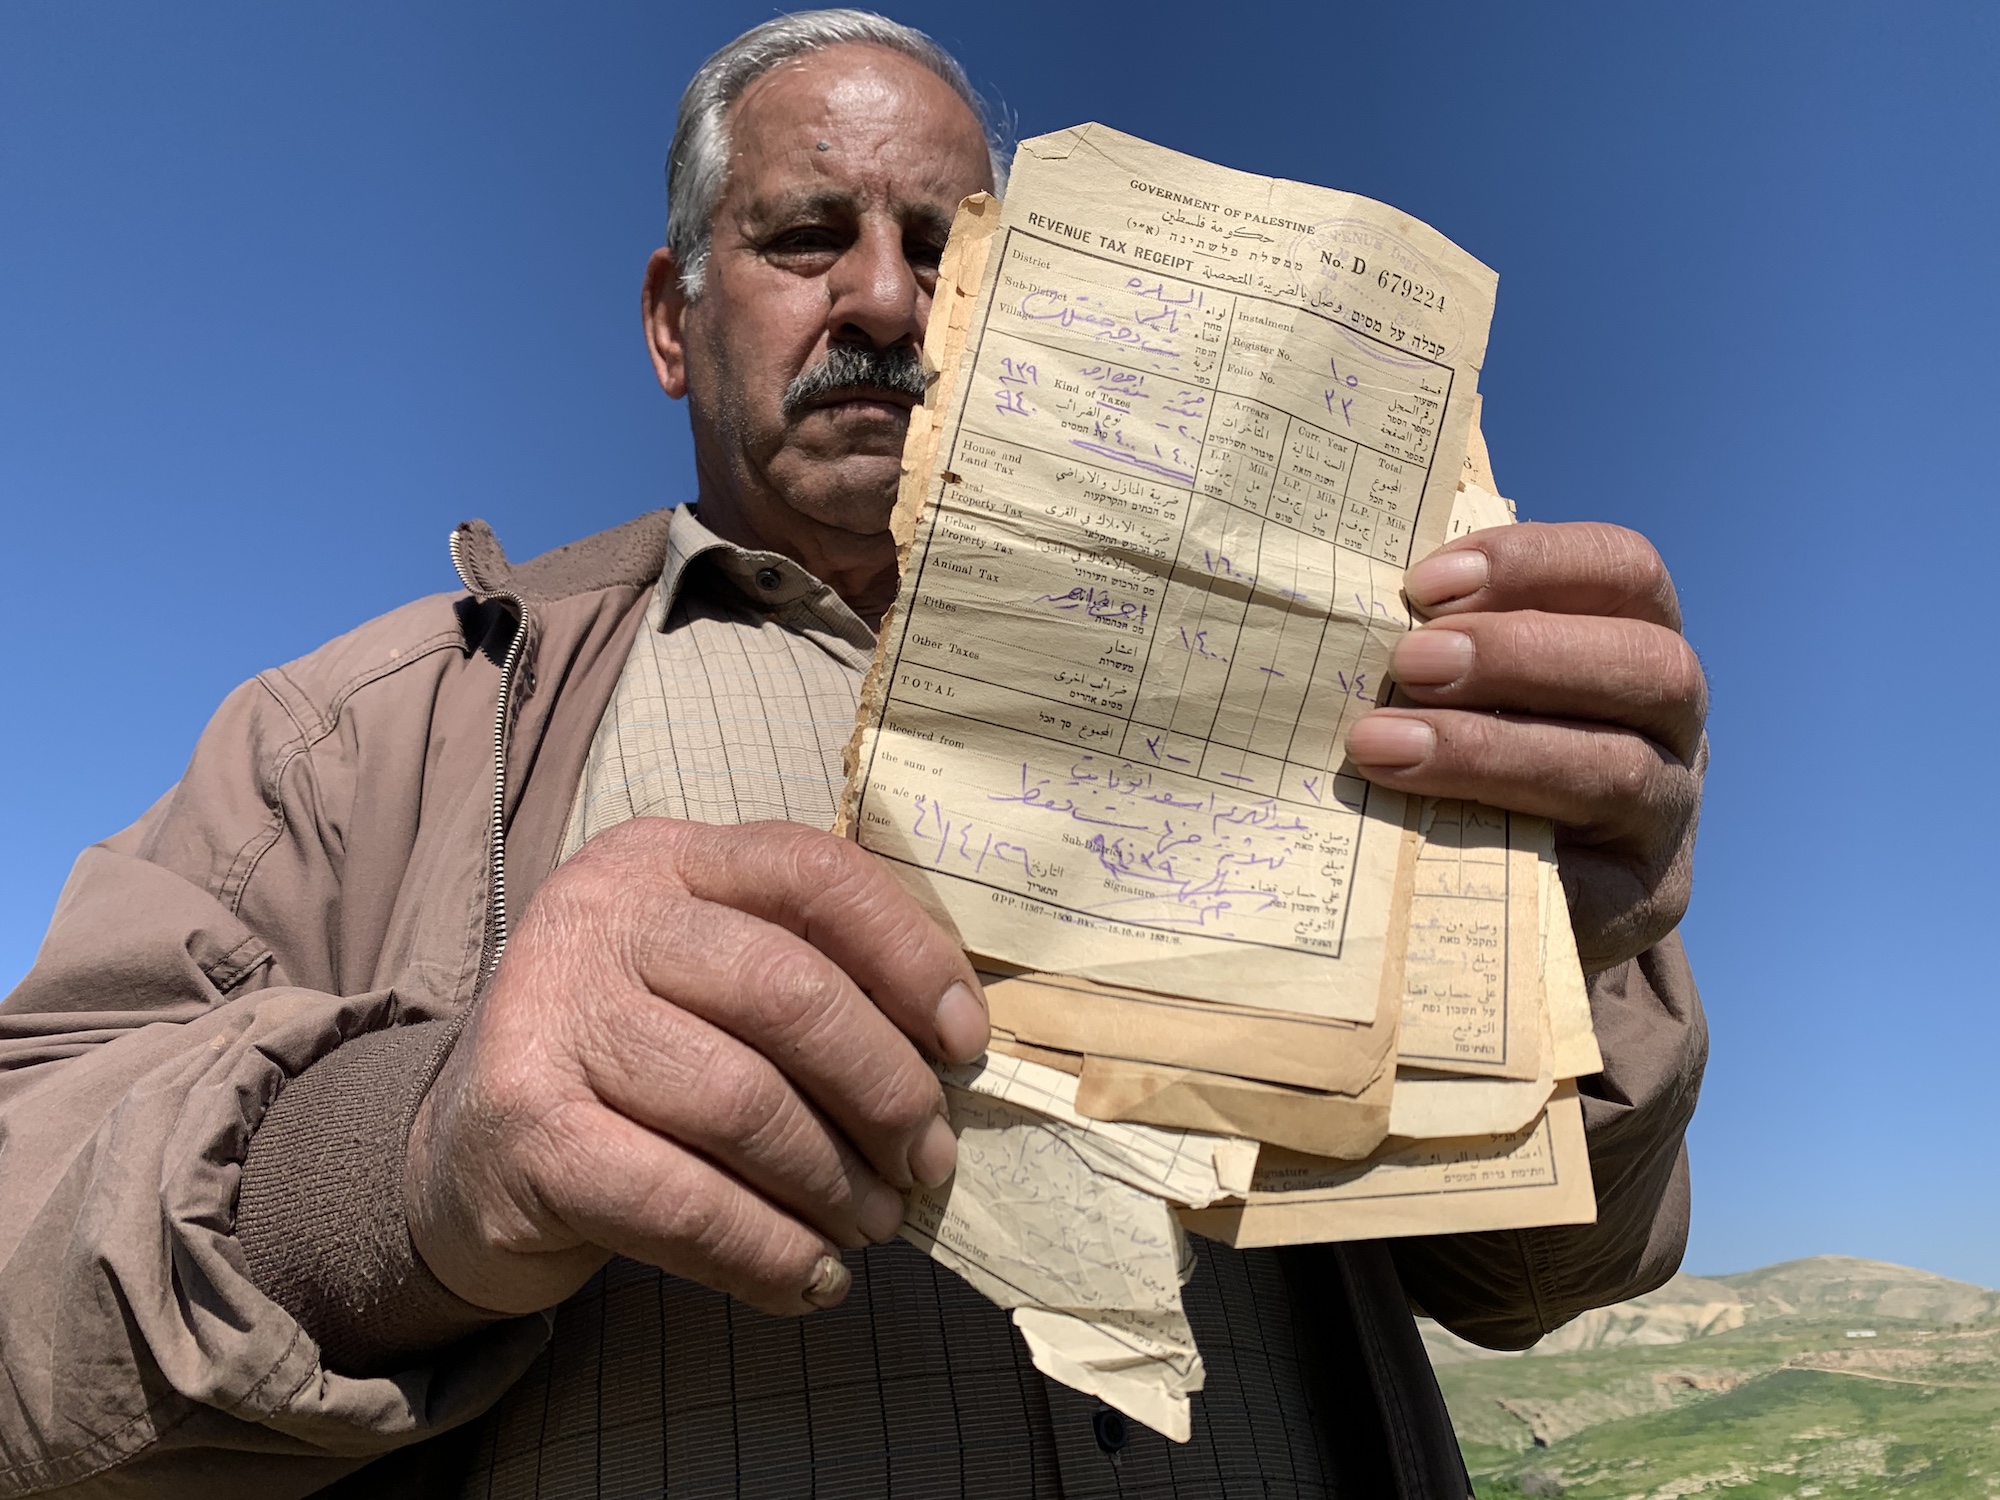 Palestinian farmer Thabet holding land ownership documents